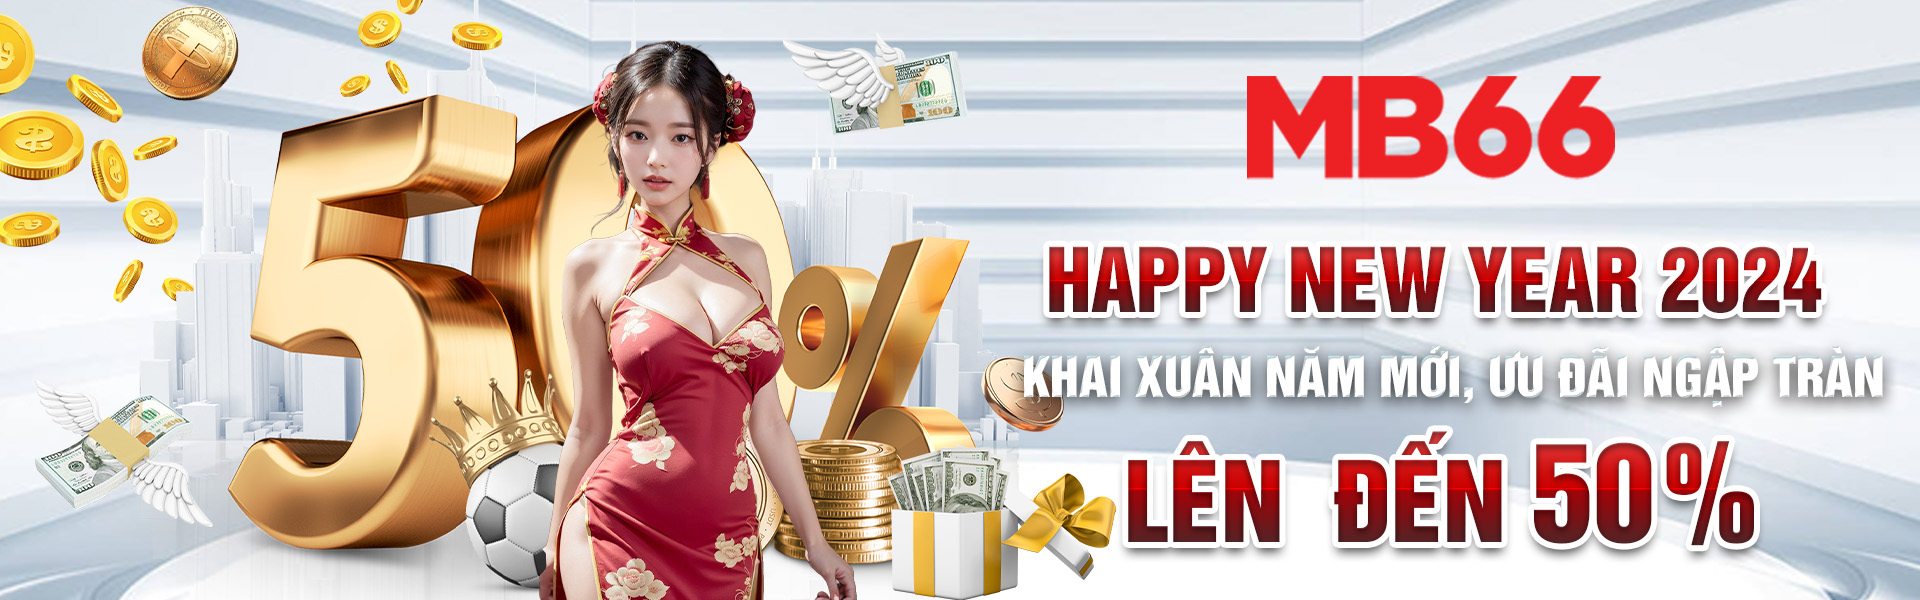 1-happy-new-year-khai-xuan-nam-moi